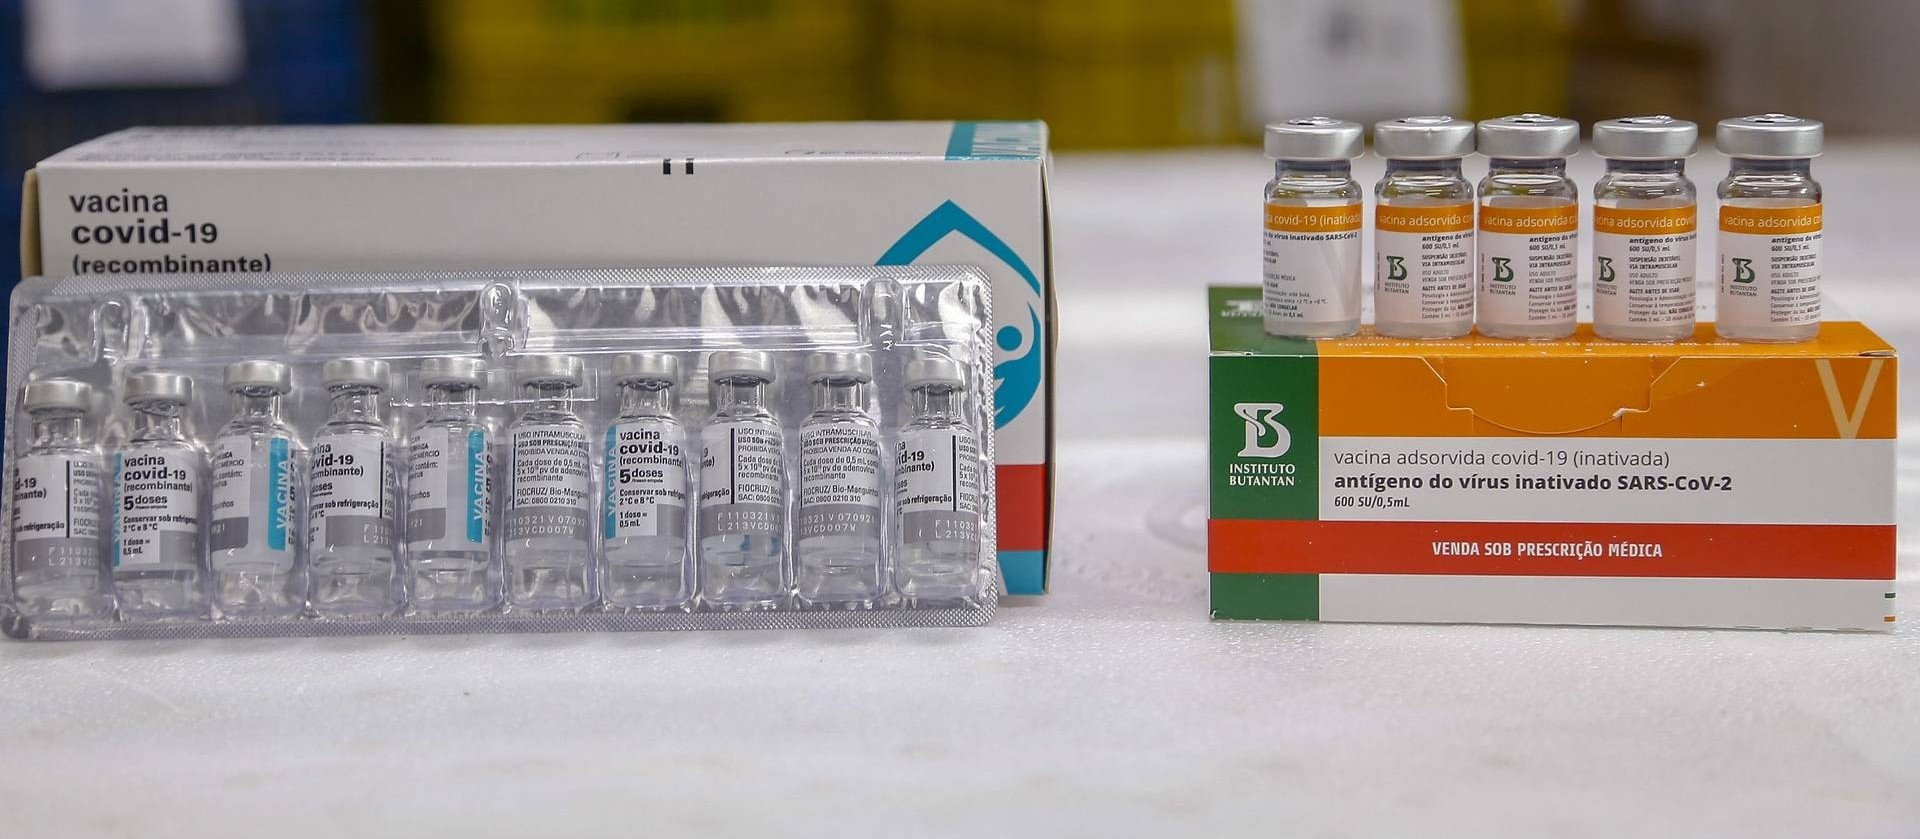 15ª Regional de Saúde distribui nova remessa de vacinas contra a Covid-19